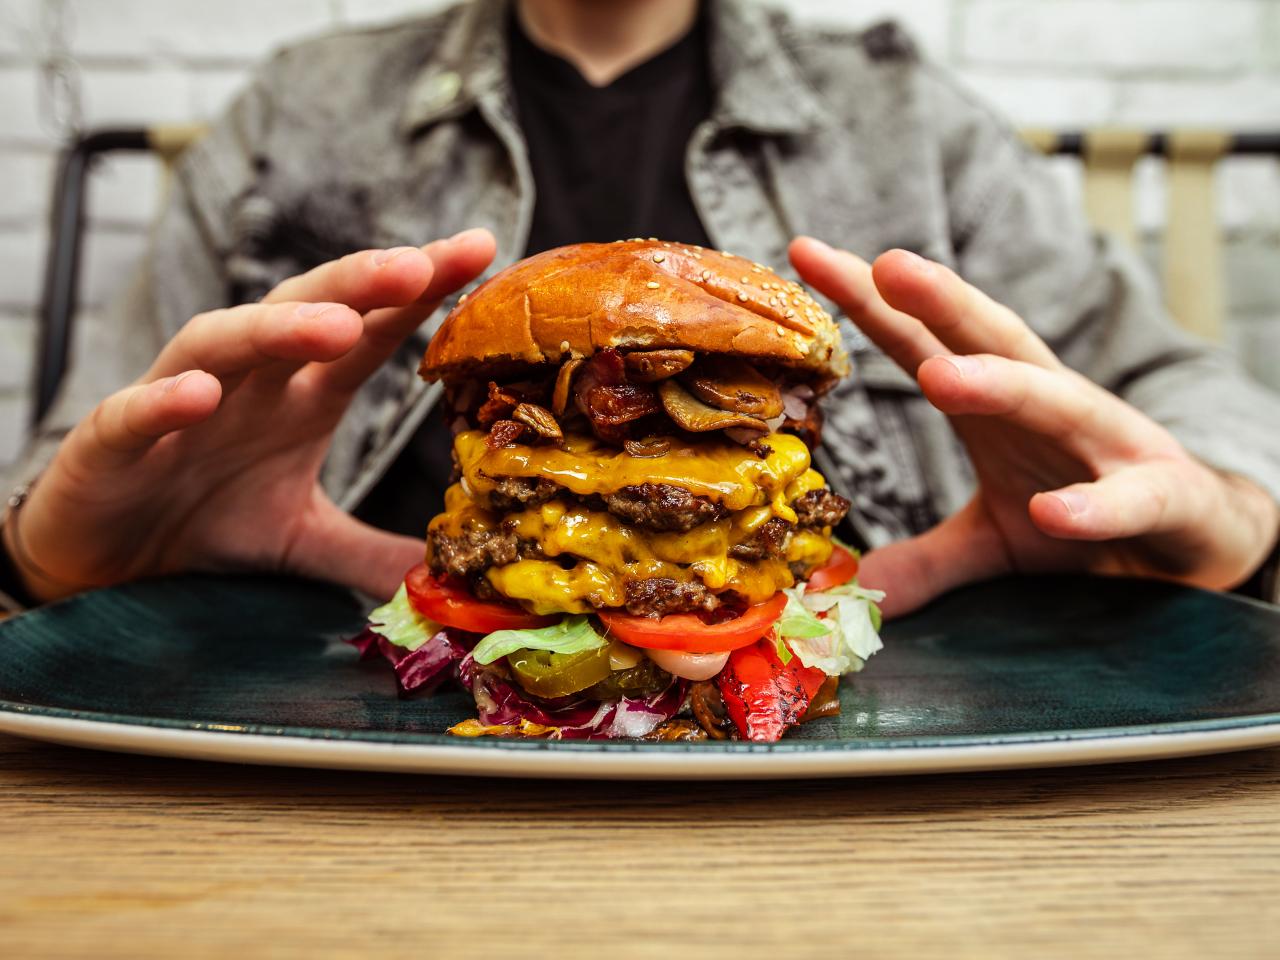 Wunschburger bei Le Burger selbst zusammenstellen